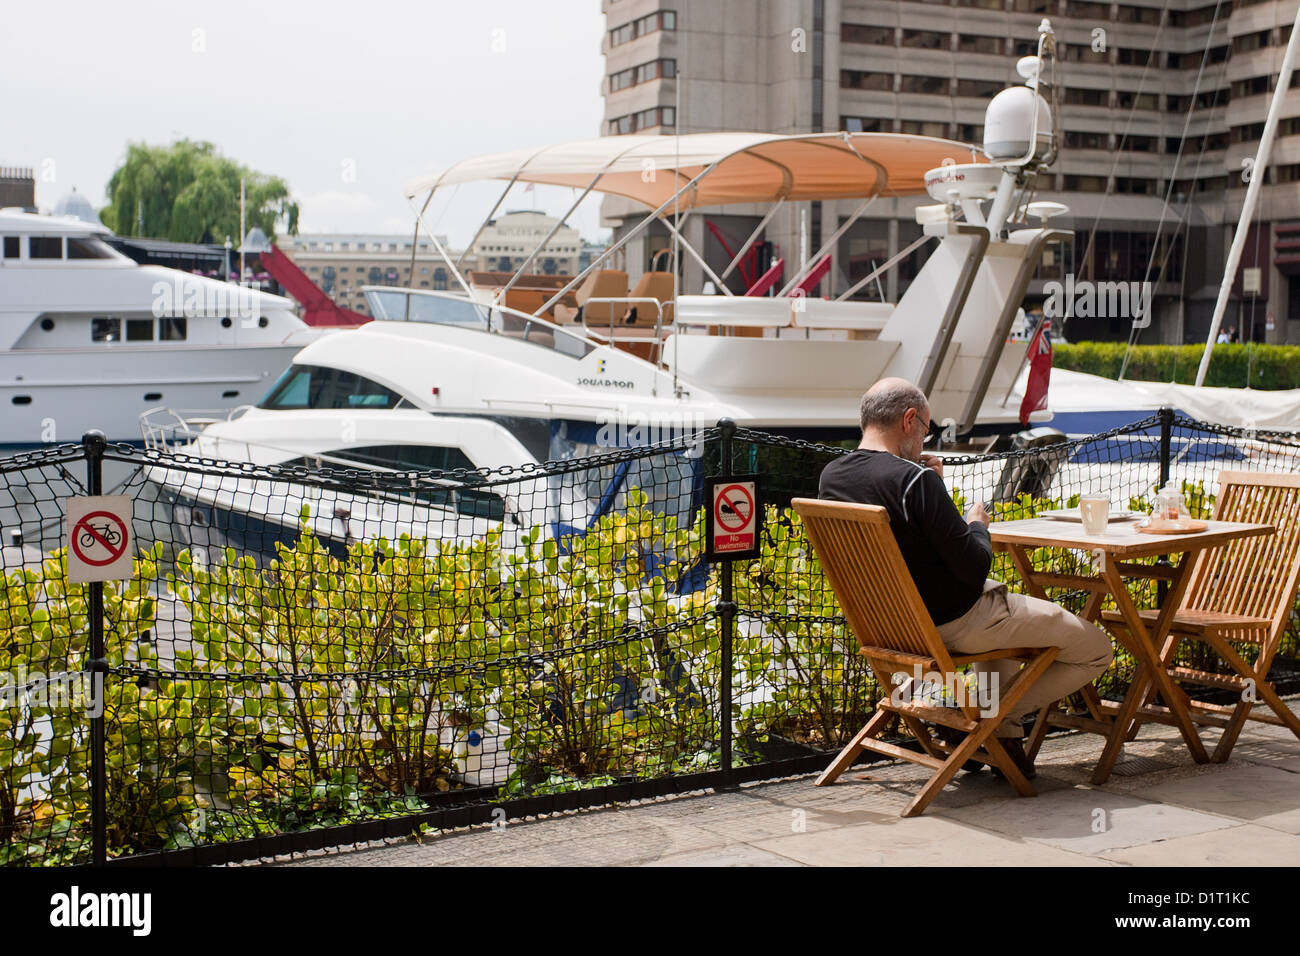 St Katharine Docks, London premiere luxury yacht Marina in the London Borough of Tower Hamlets. Stock Photo